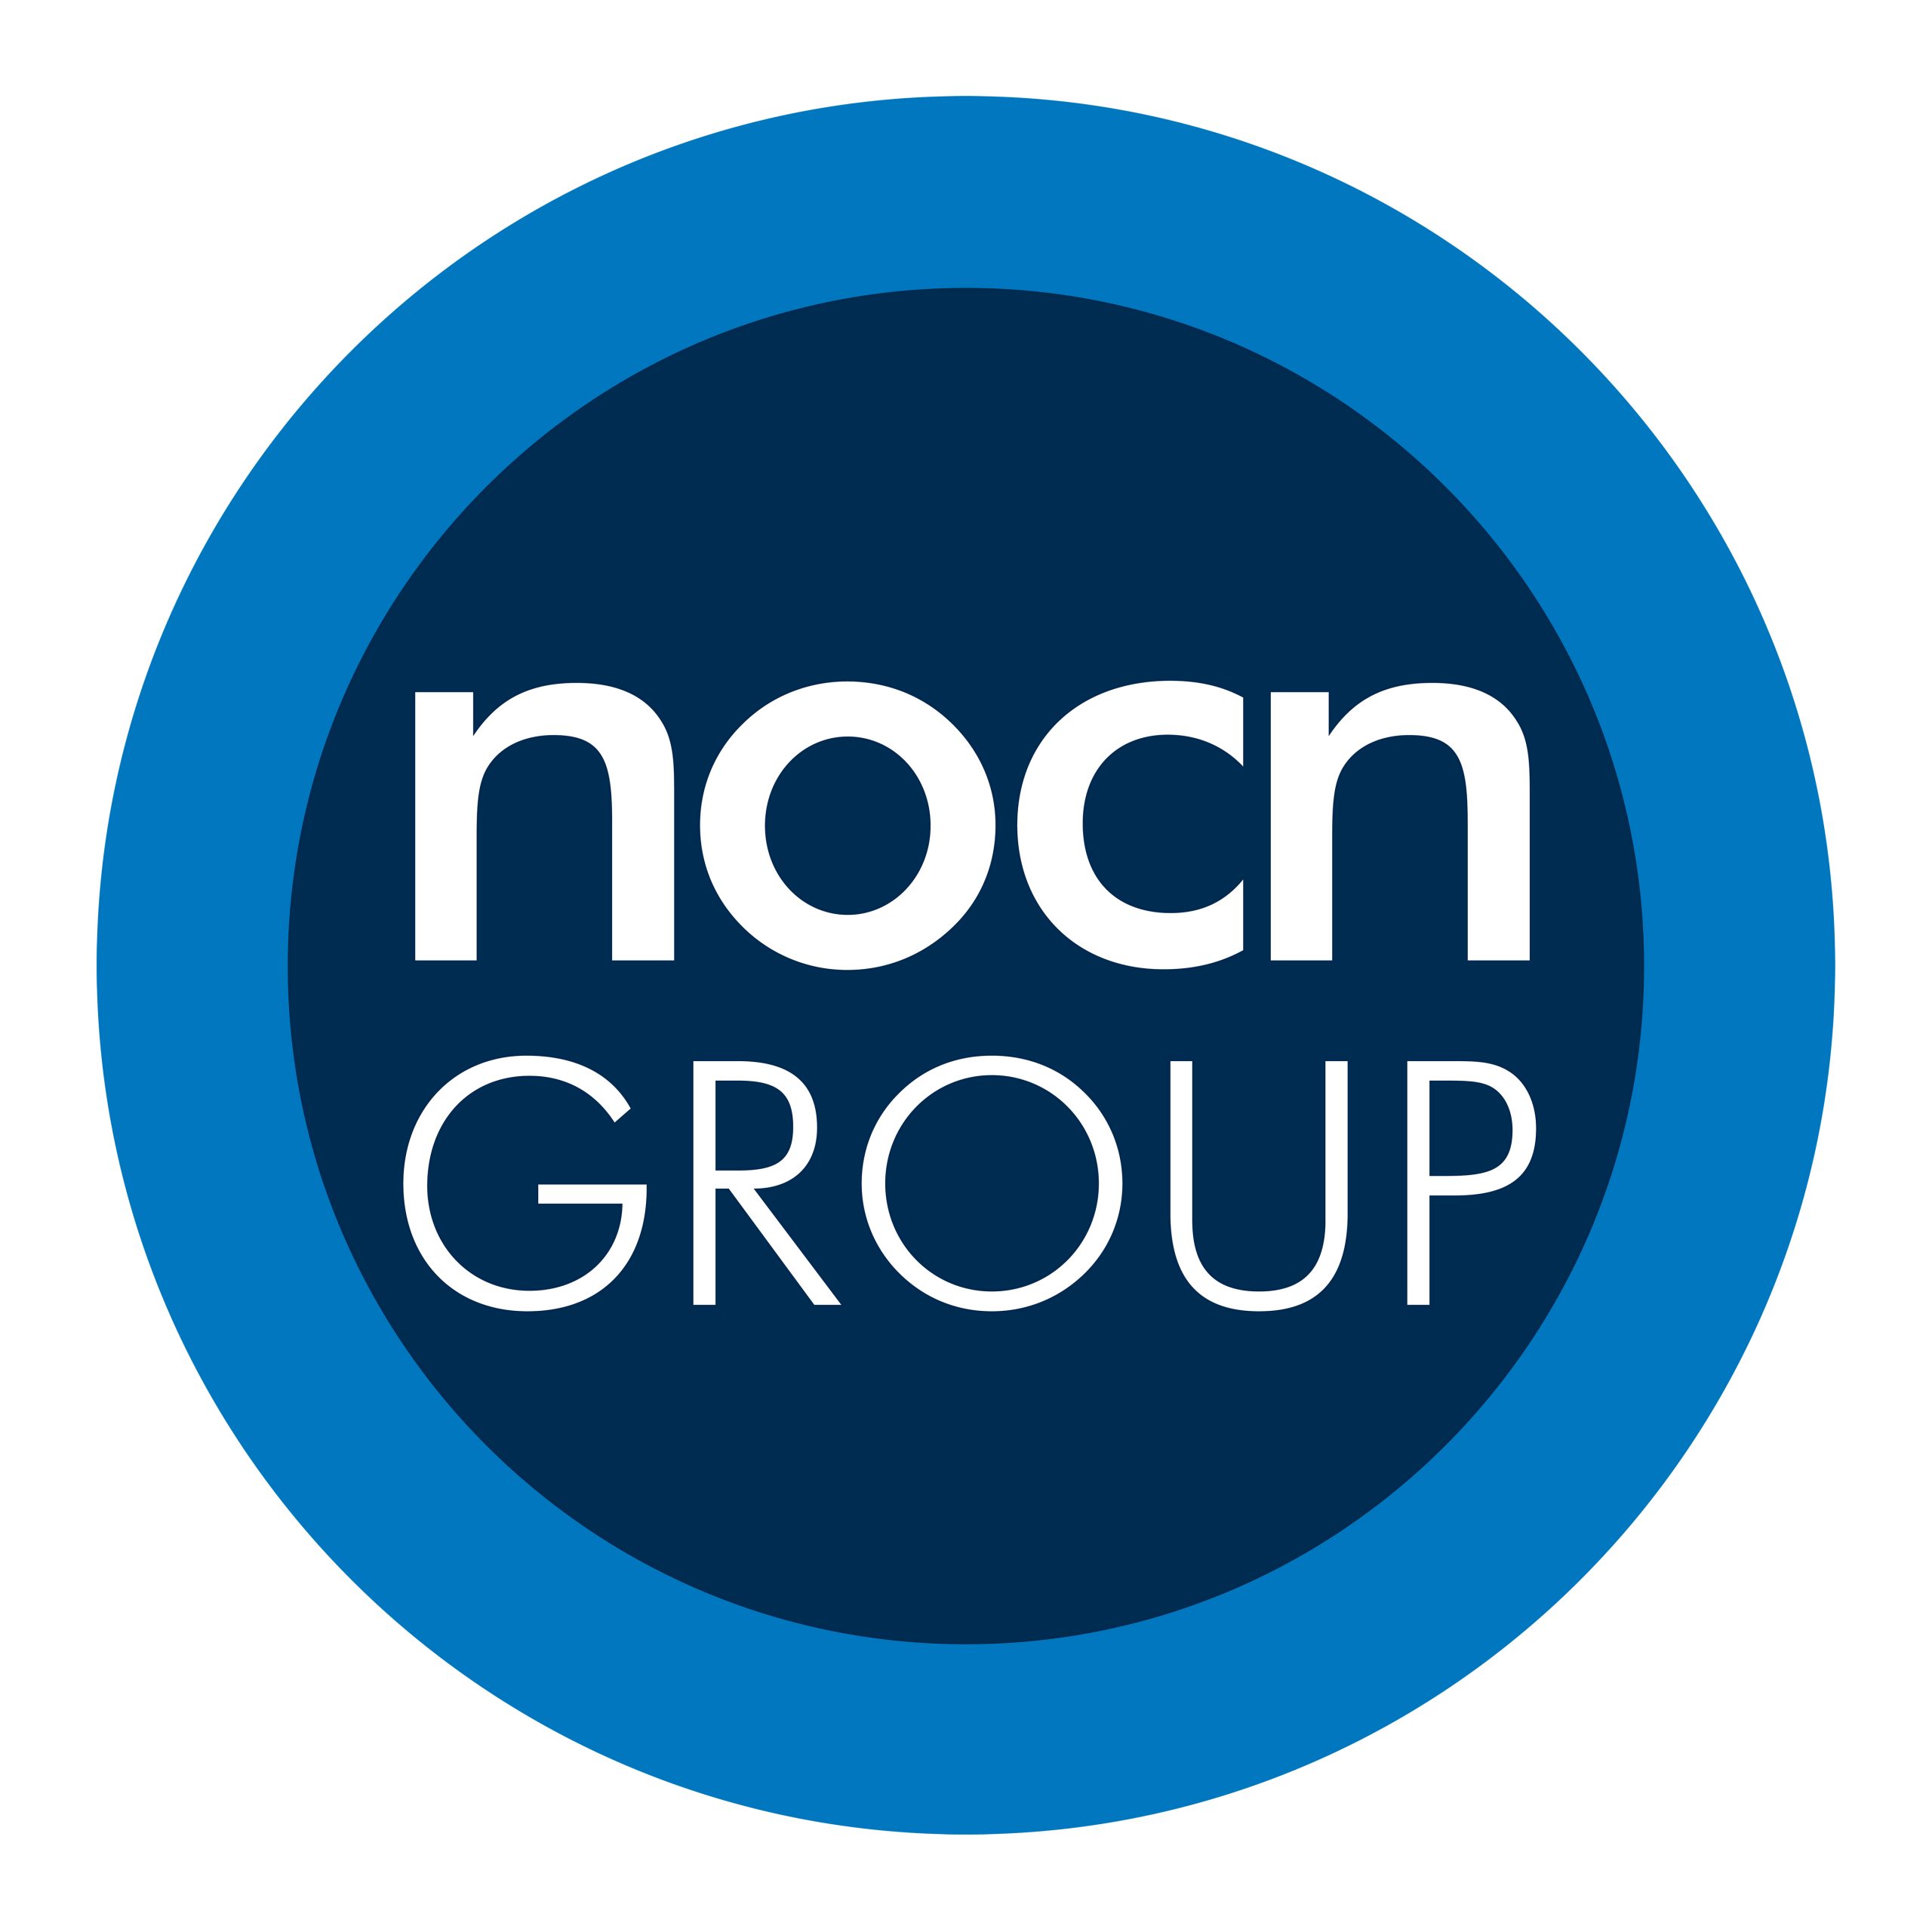 It's the NOCN Group logo.